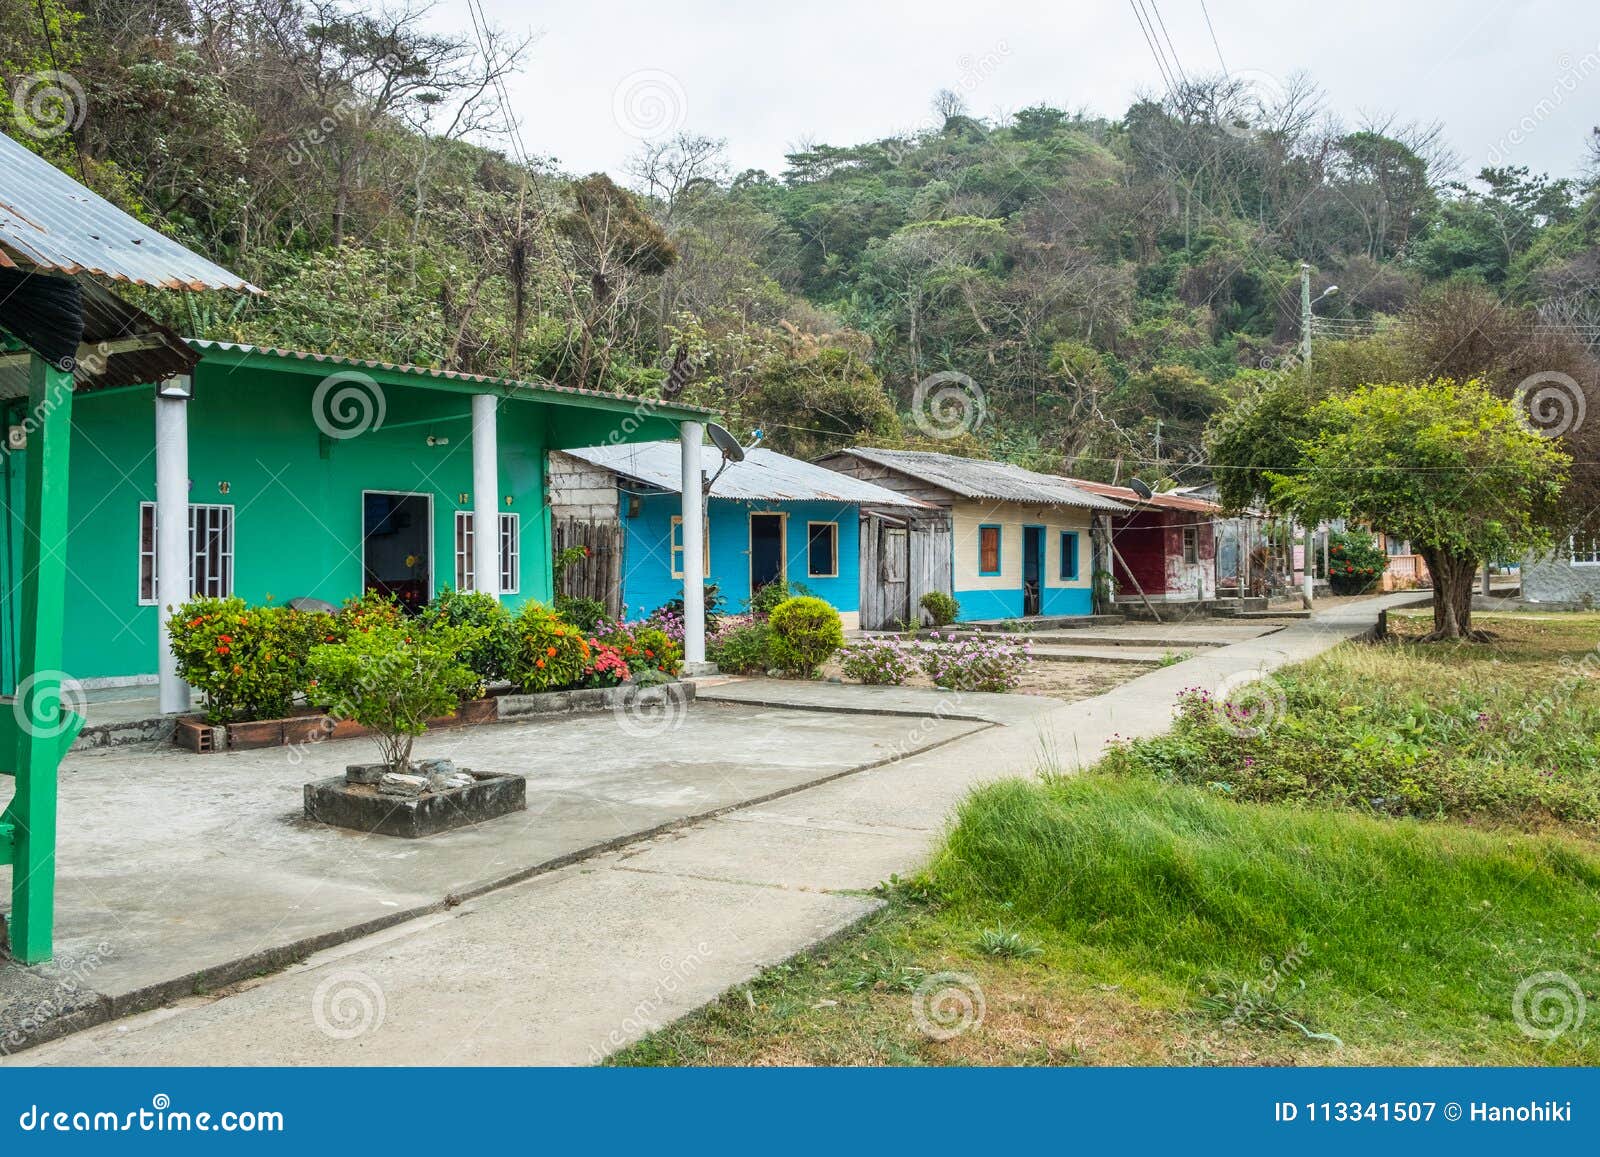 residential houses in village - la miel, panama